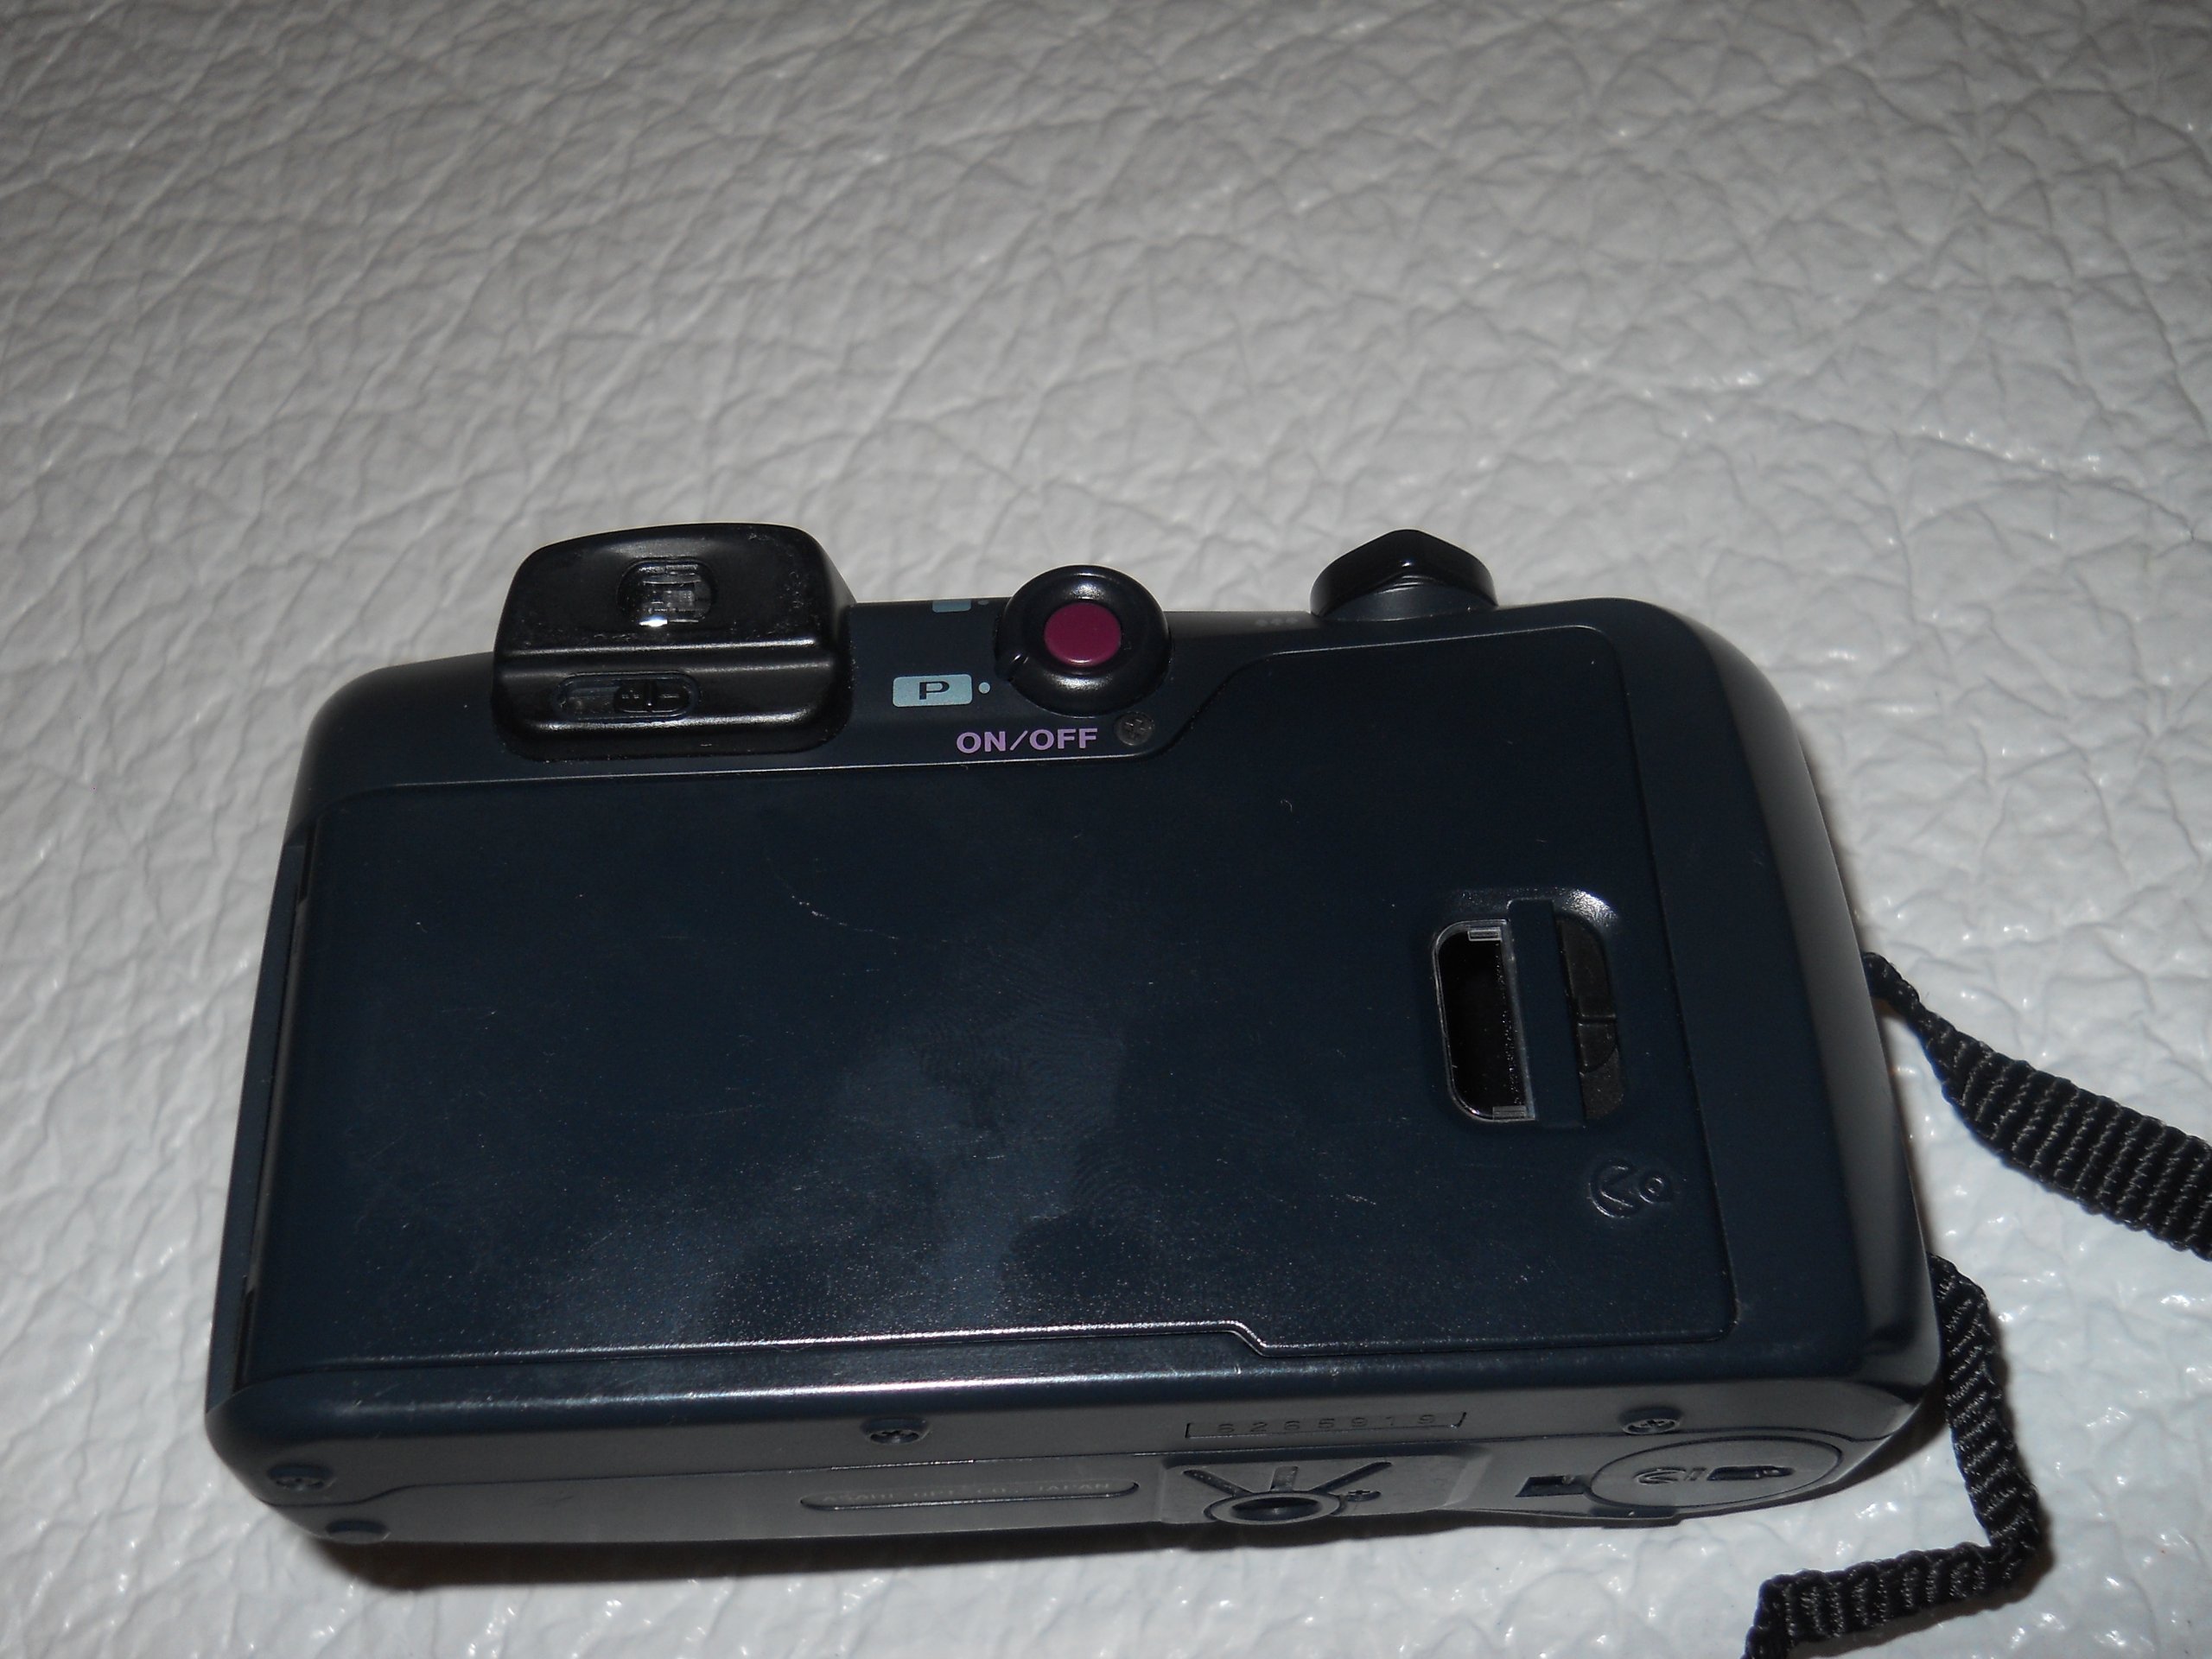 Pentax IQ Zoom 115S 35mm Camera